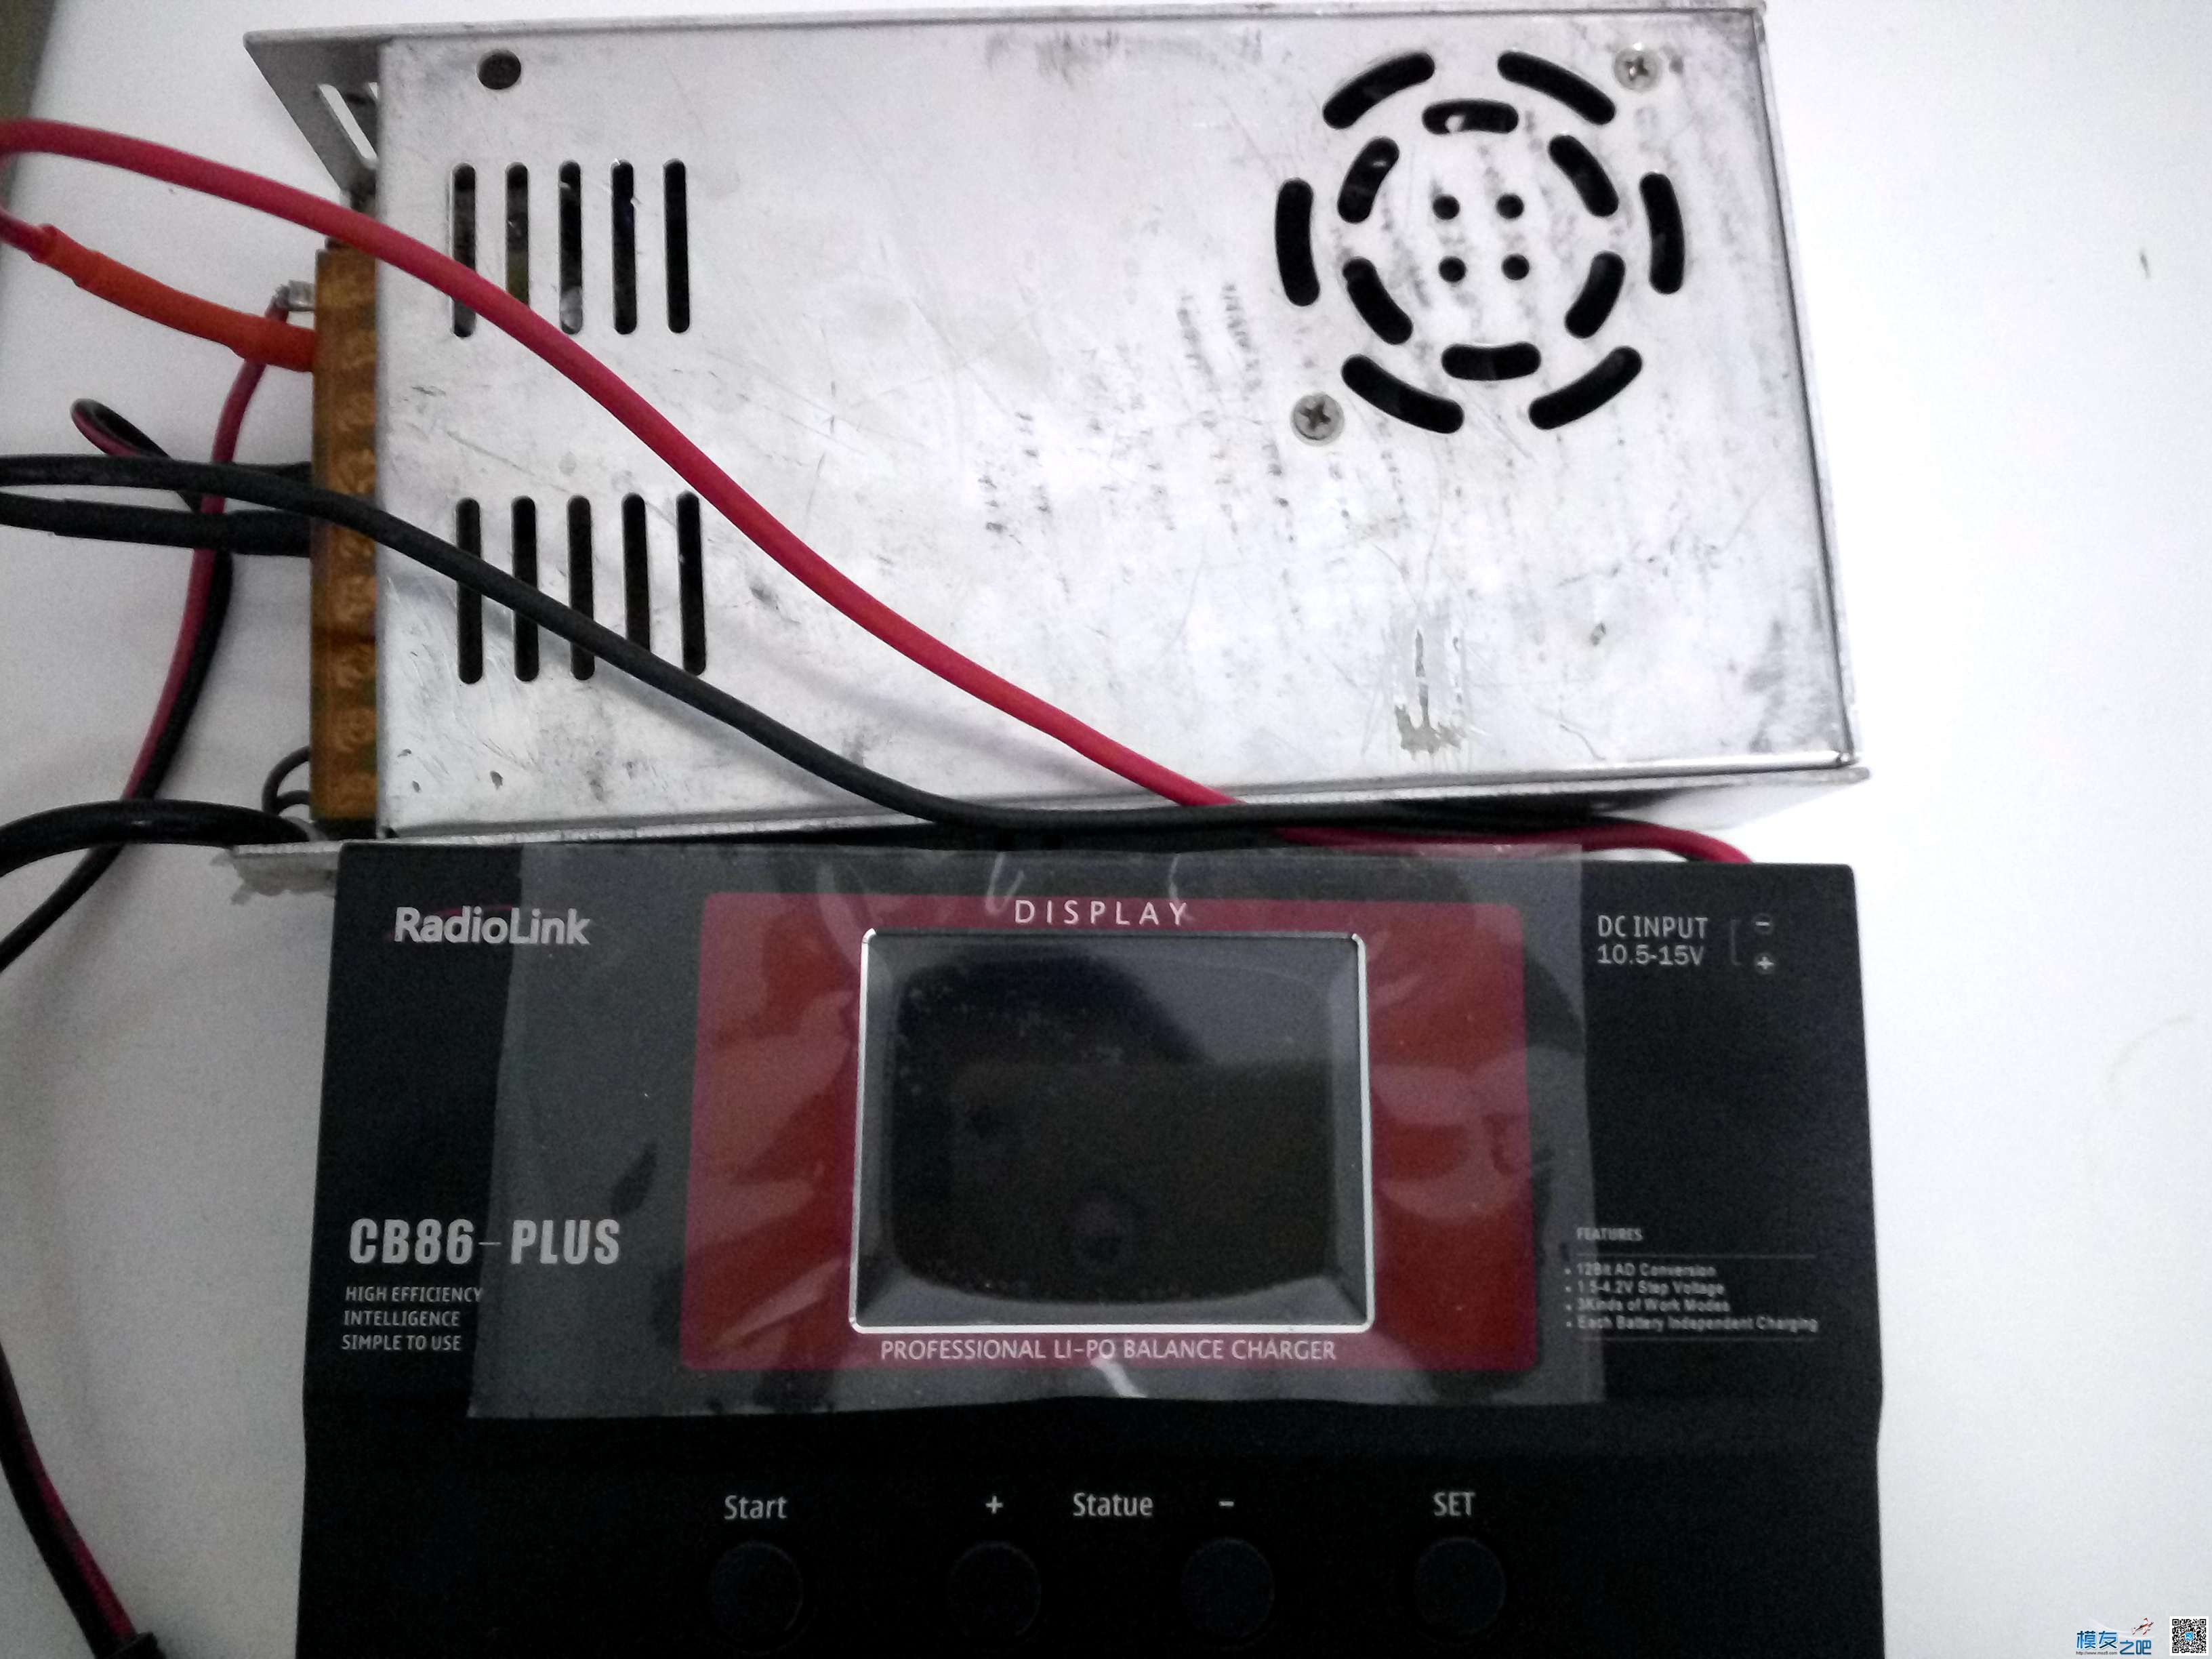 CB86-PLUS 升级Ver2.4,及使用感受 充电器,乐迪,固件 作者:武杰杰 1830 